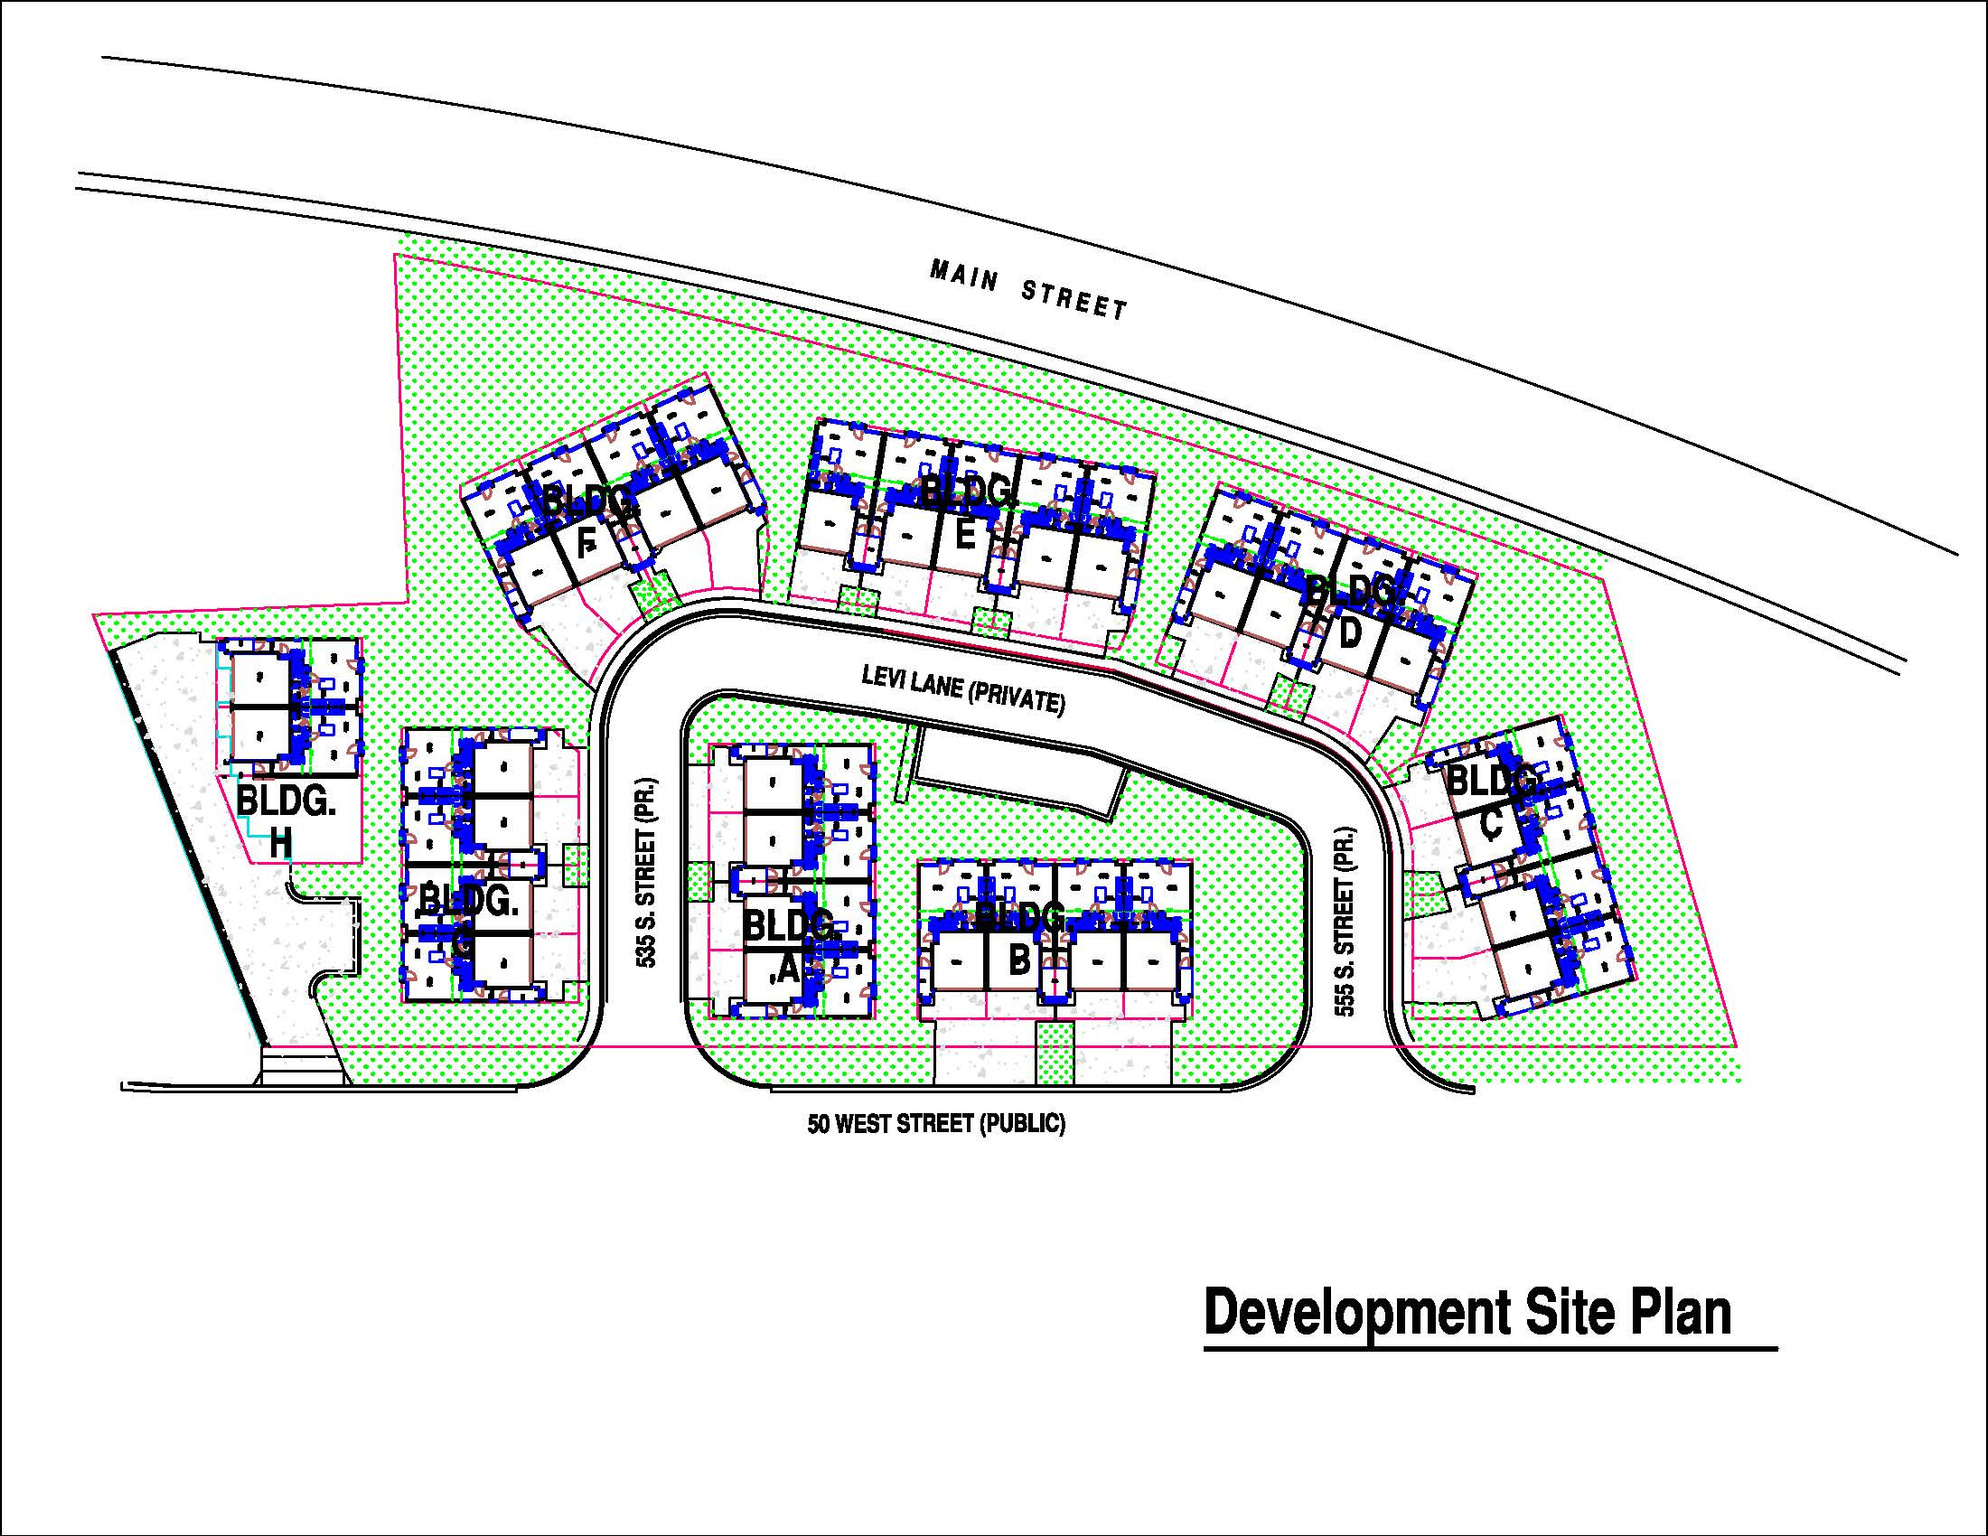 Development Site Plan